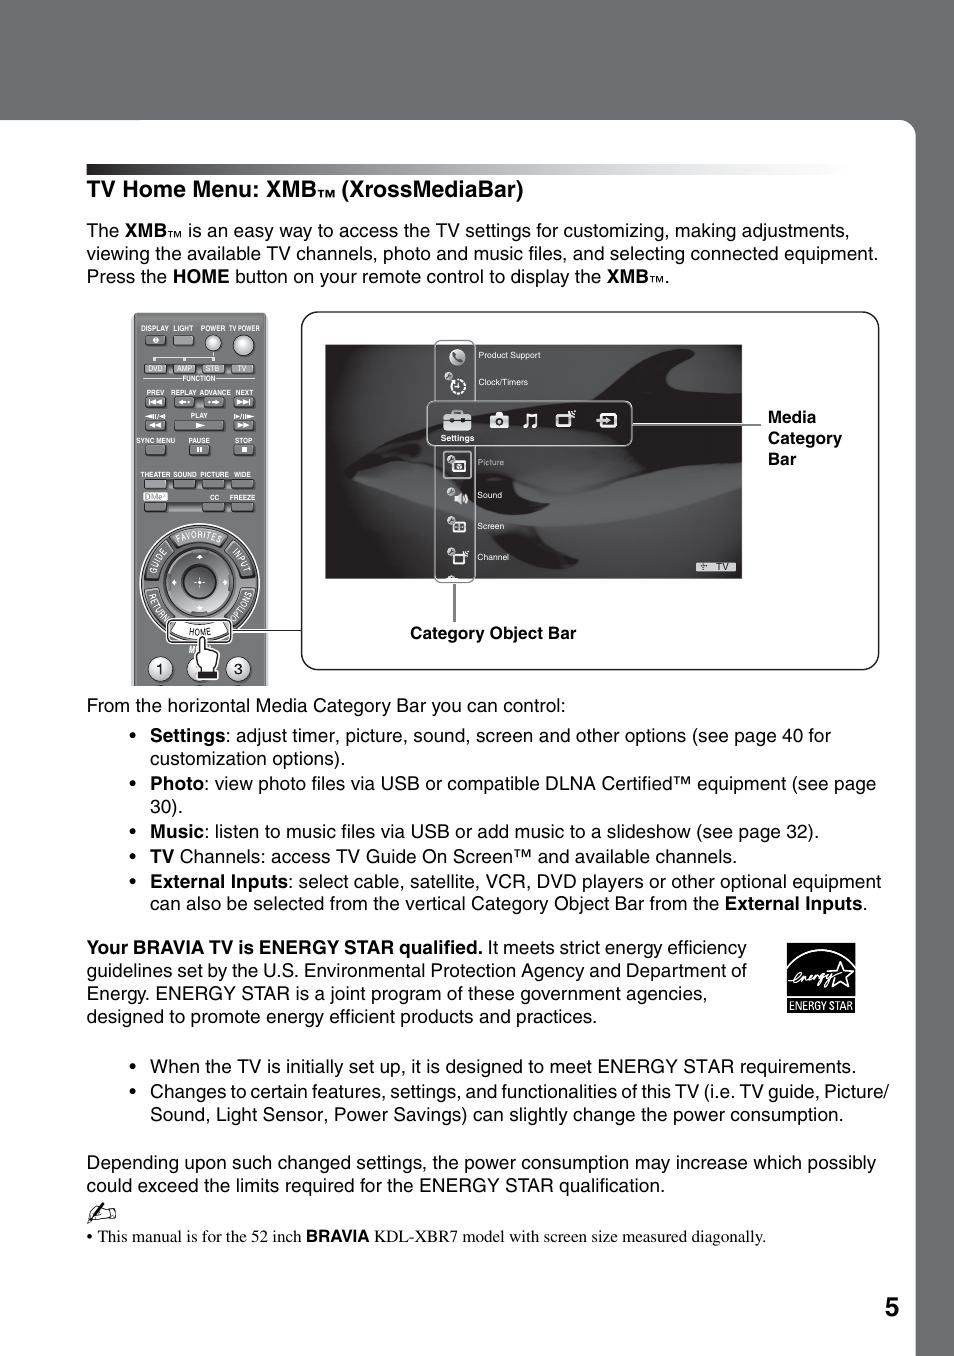 Tv home menu: xmb™ (xrossmediabar), Tv home menu: xmb, Xrossmediabar) | The xmb | Sony KDL-52XBR7 User Manual | Page 5 / 60